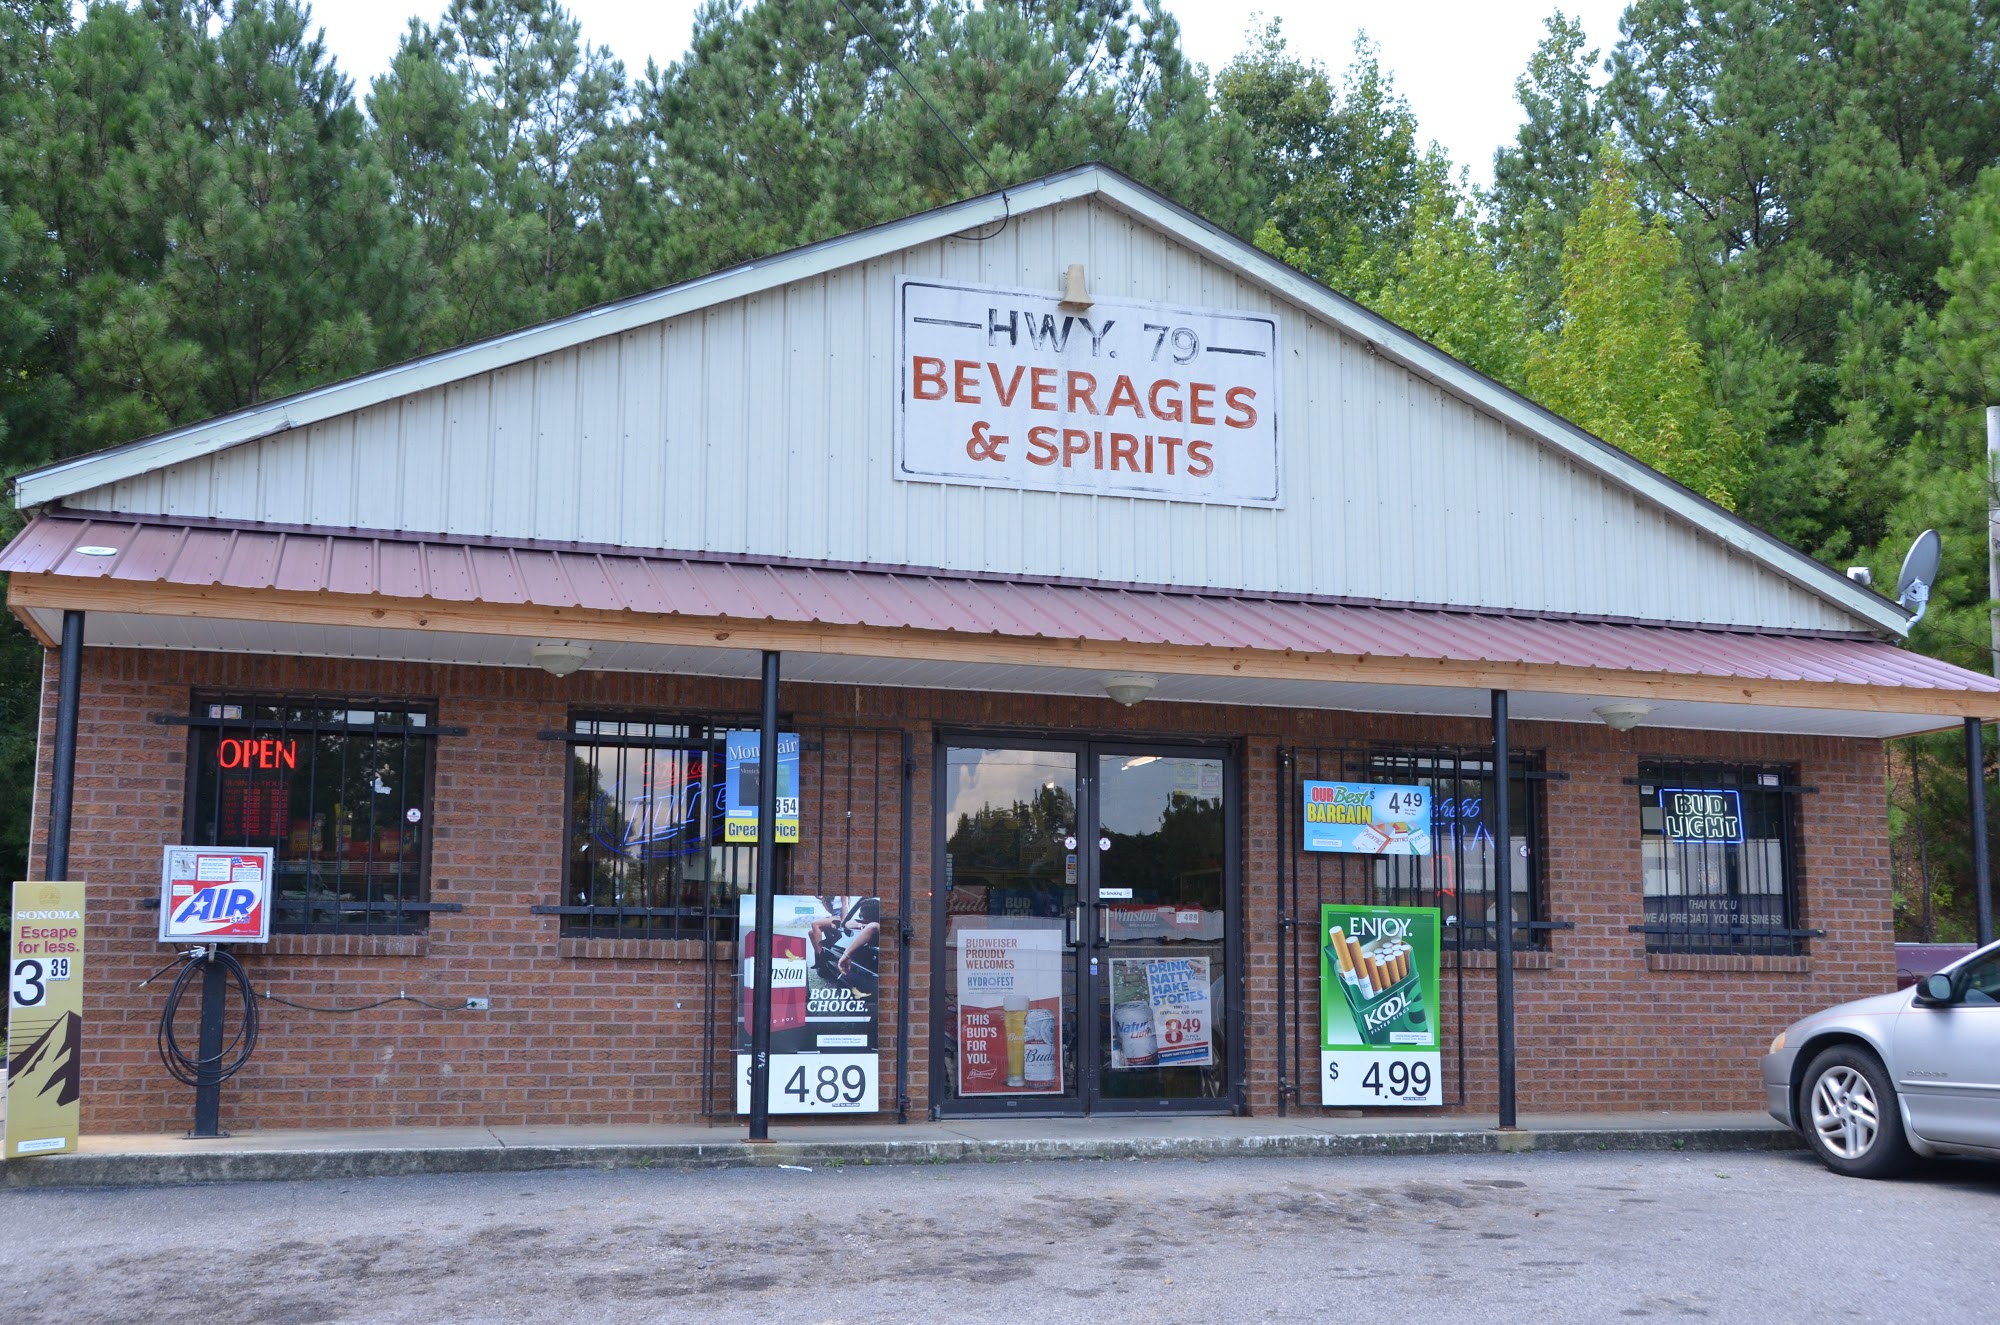 Highway 79 Beverages & Spirits